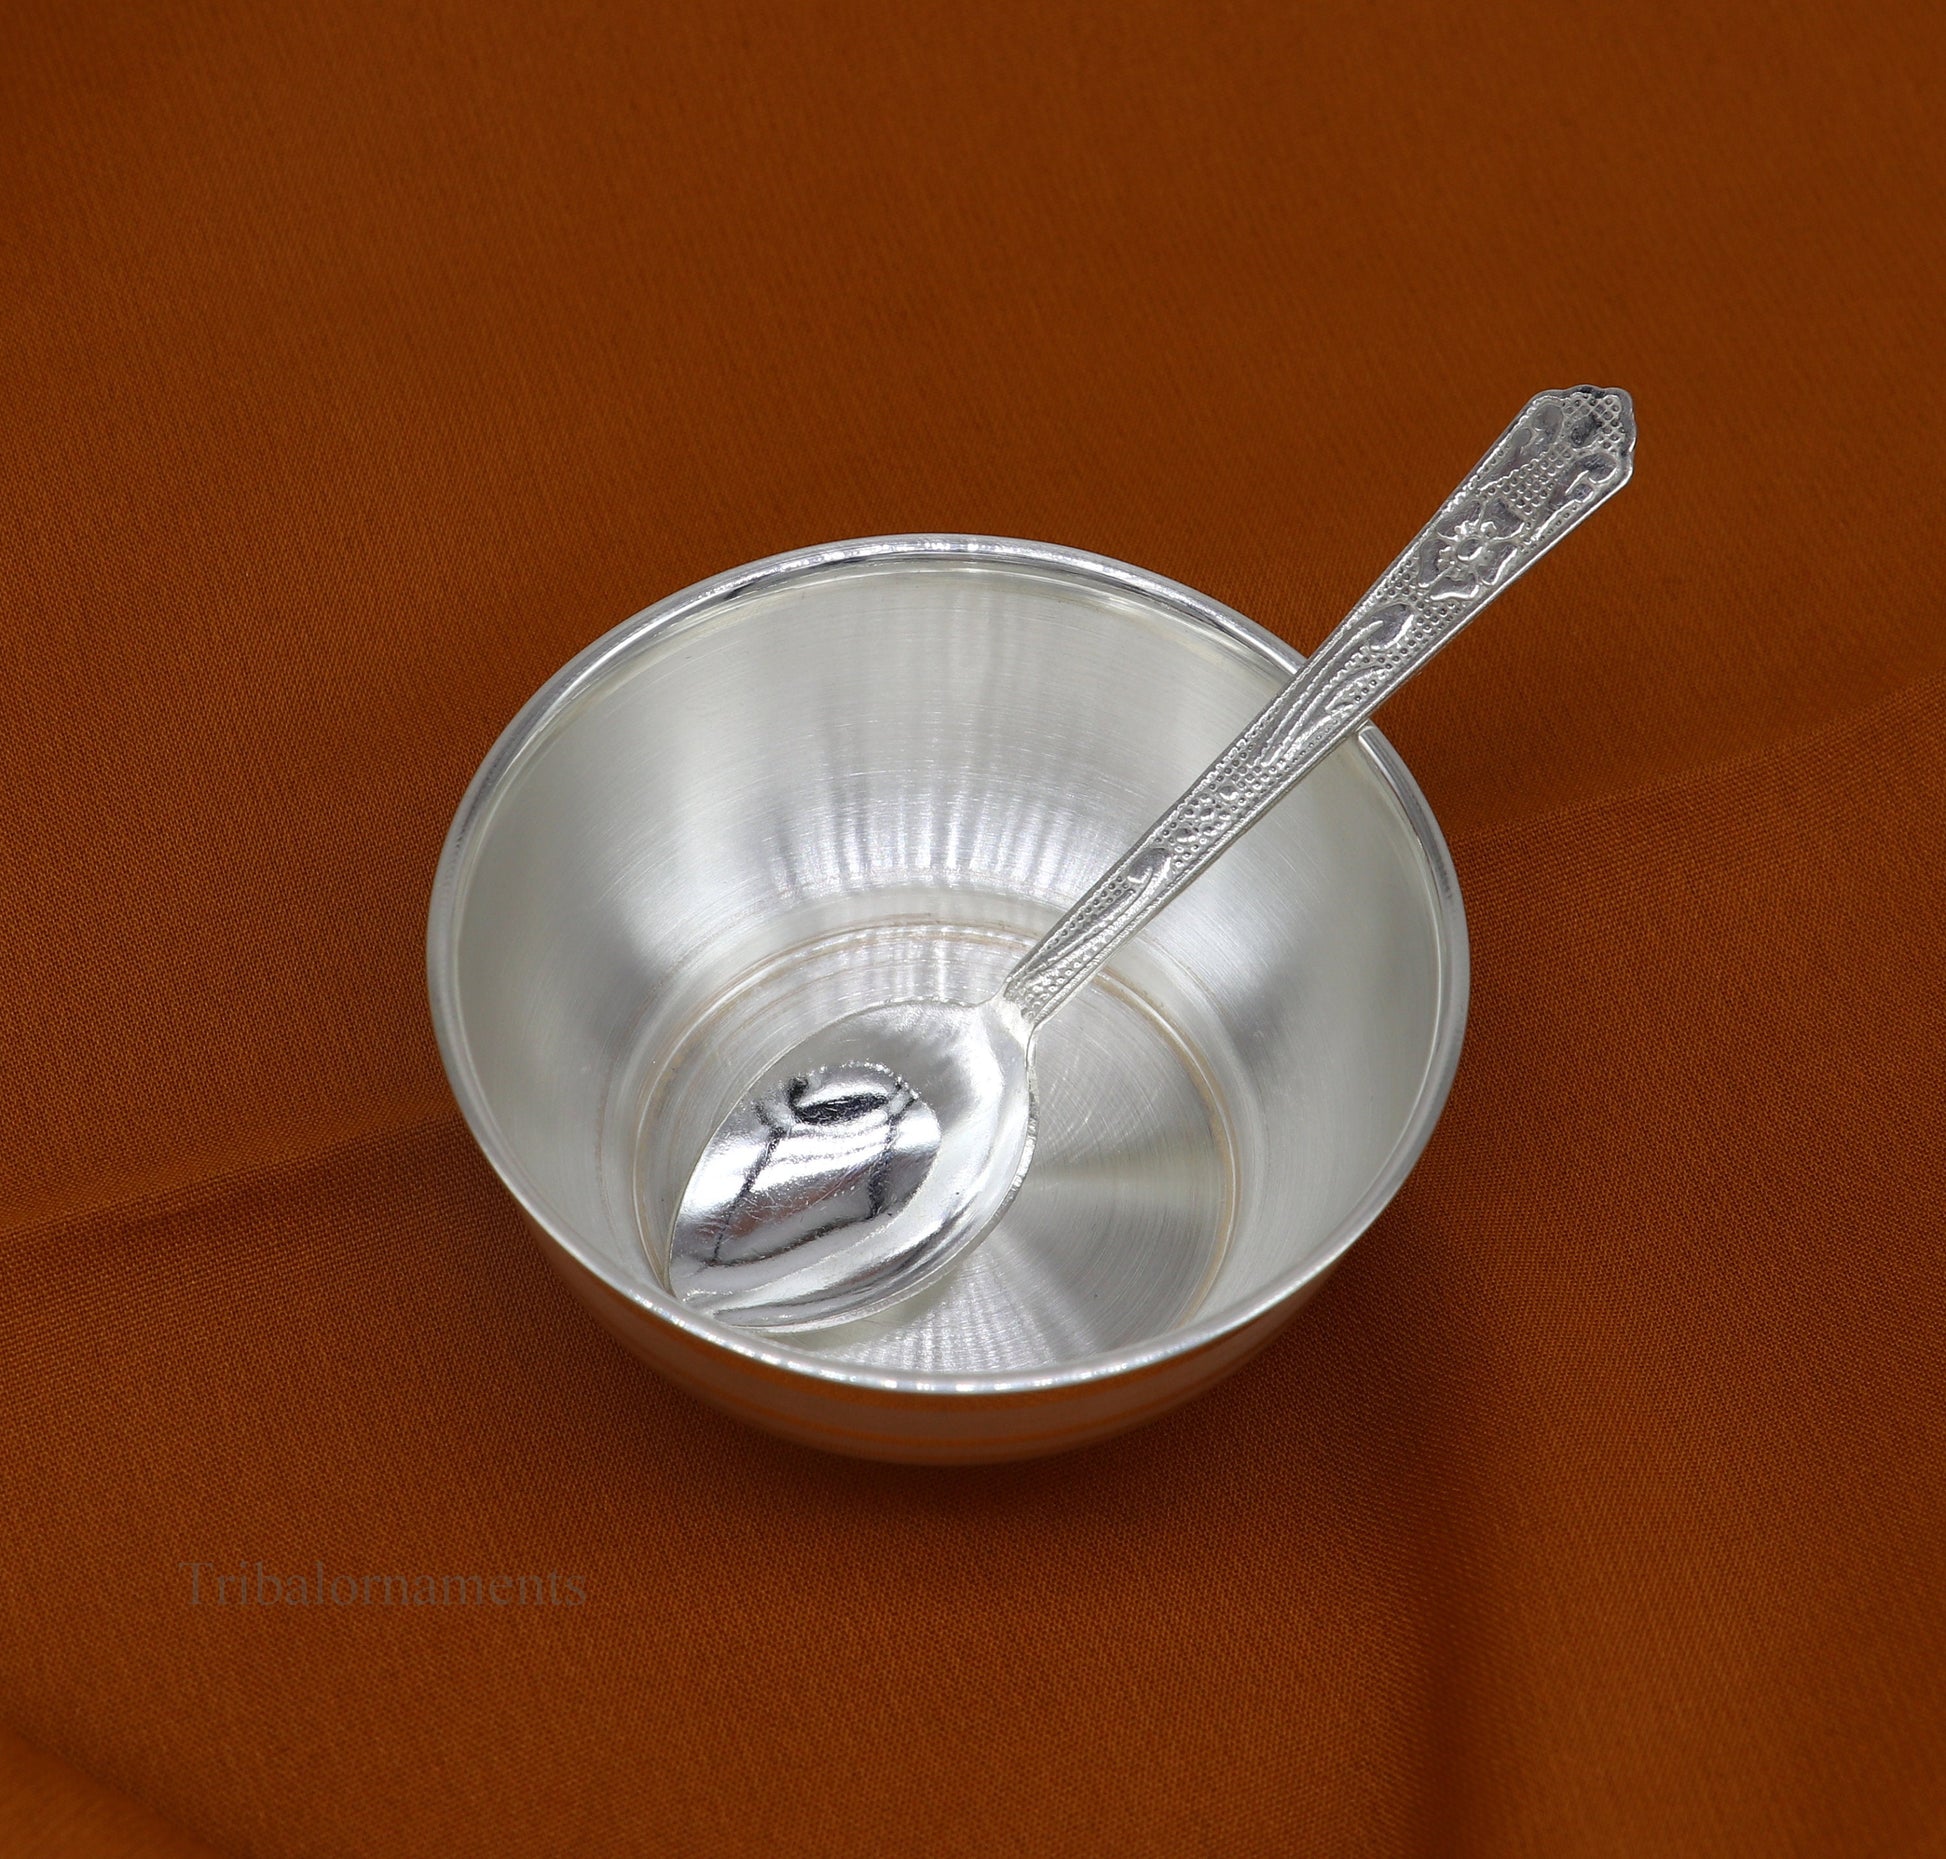 999 pure fine silver handmade utensils, silver article, silver vessel, silver accessories, silver puja art, silver baby bowl set sv242 - TRIBAL ORNAMENTS